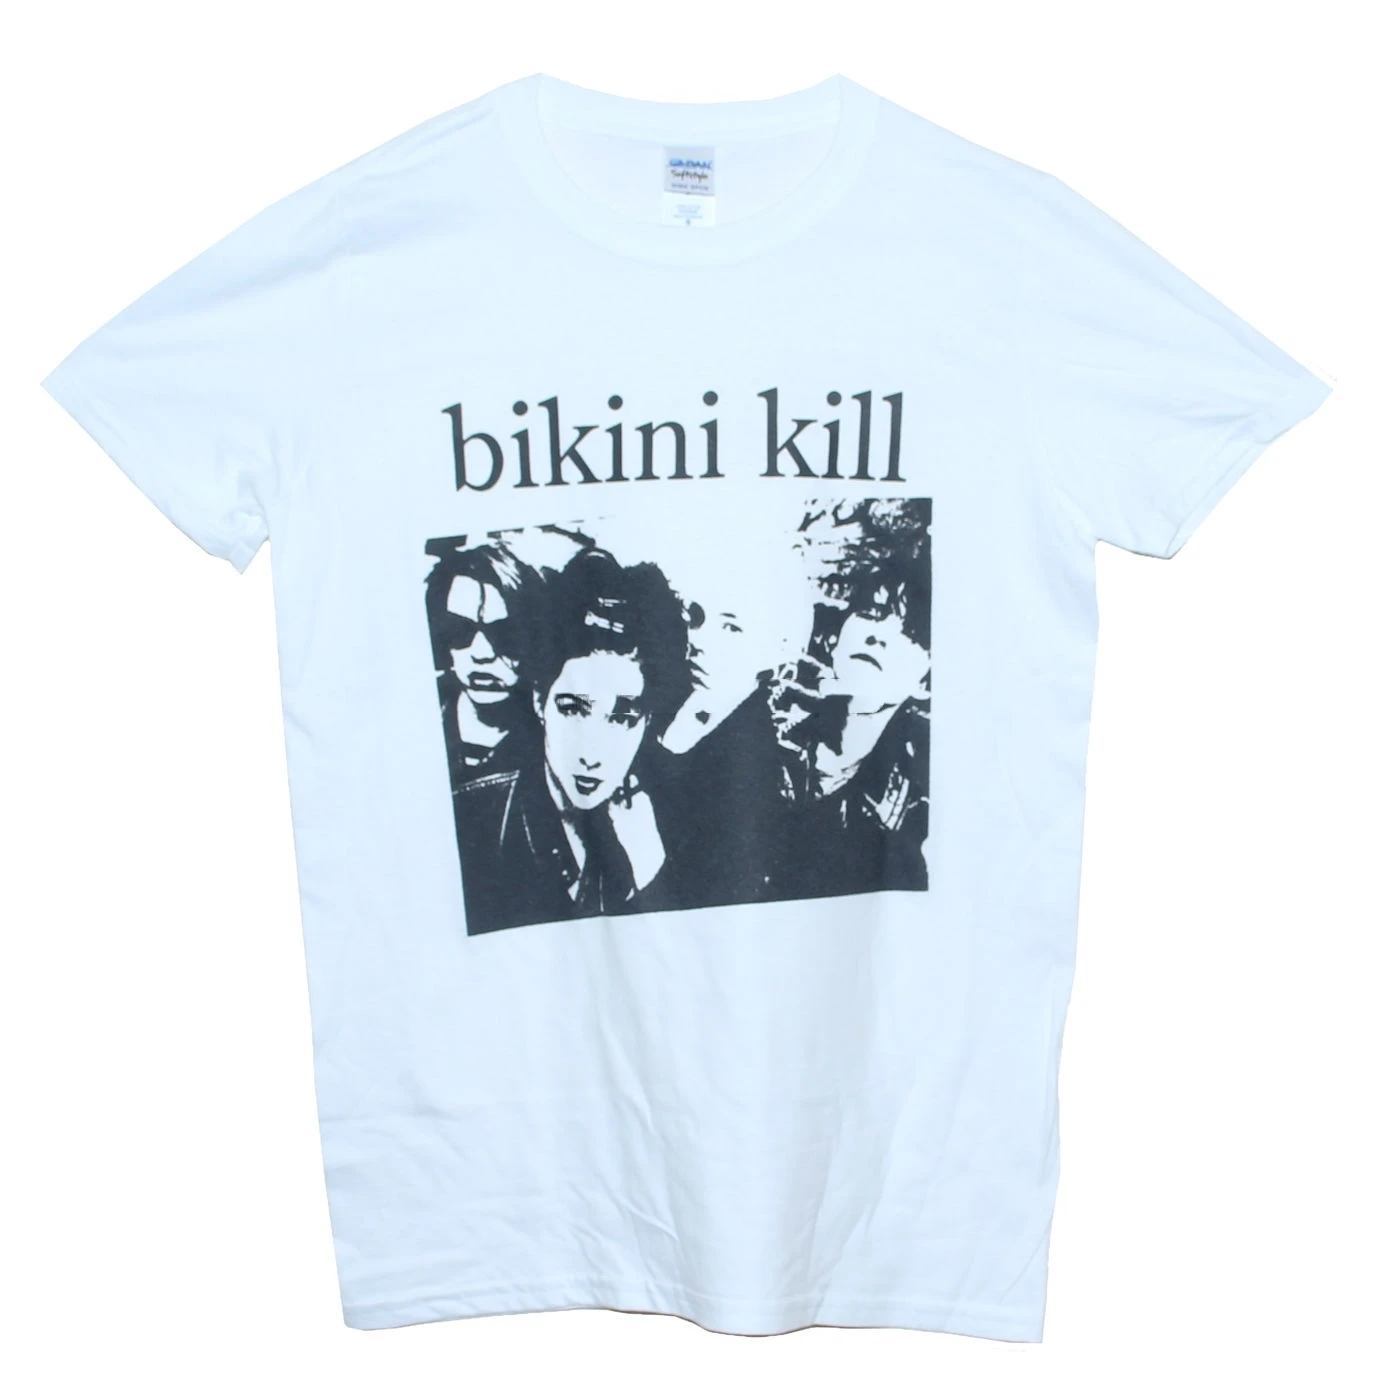 Bikini Kill T Shirt Punk Riot Grrrl Feminist Band Printed Graphic Music Tee